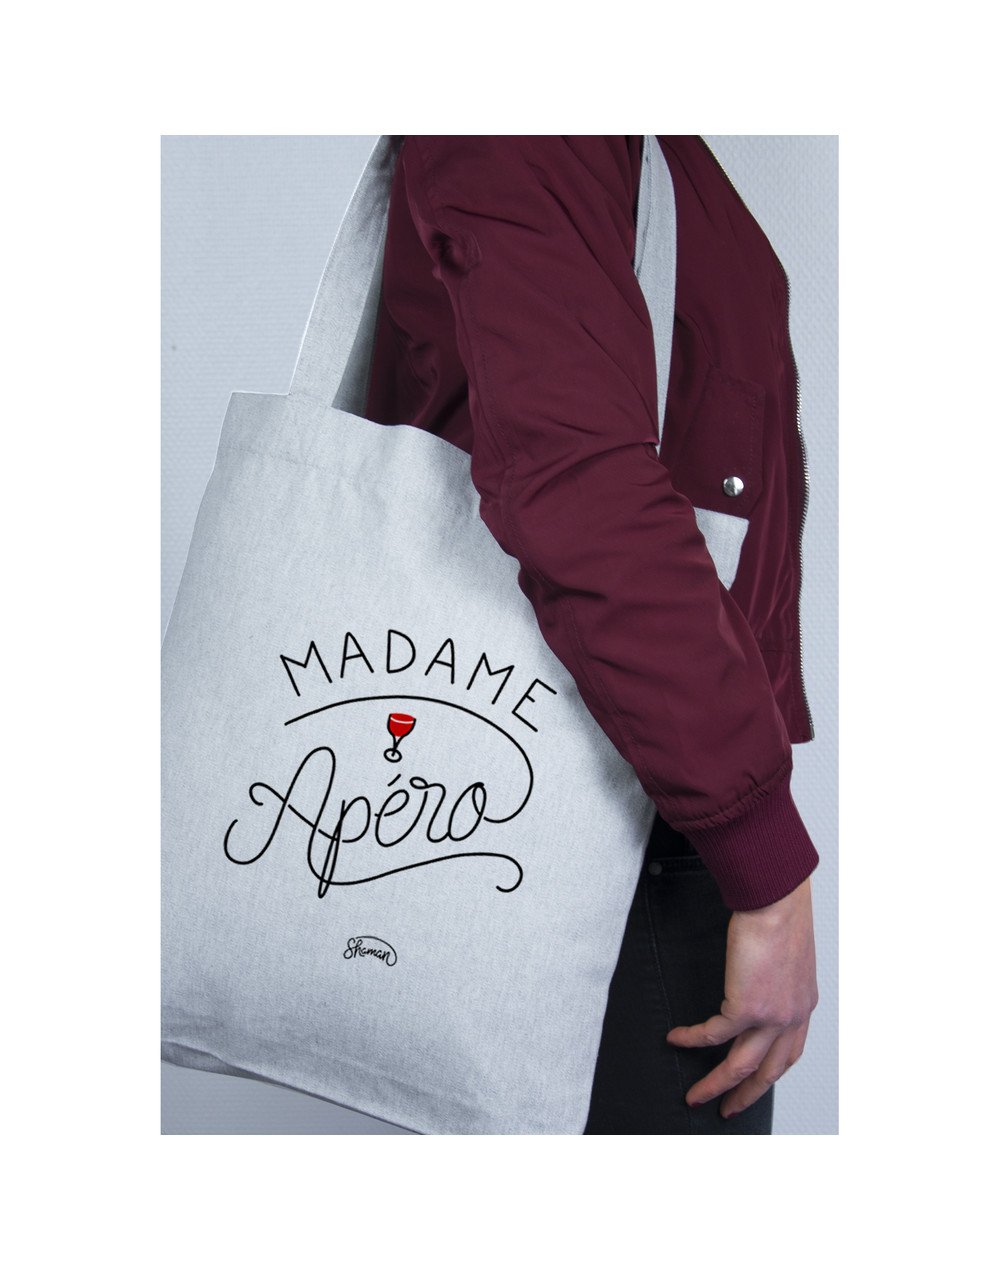 Tote Bag "Madame apéro"